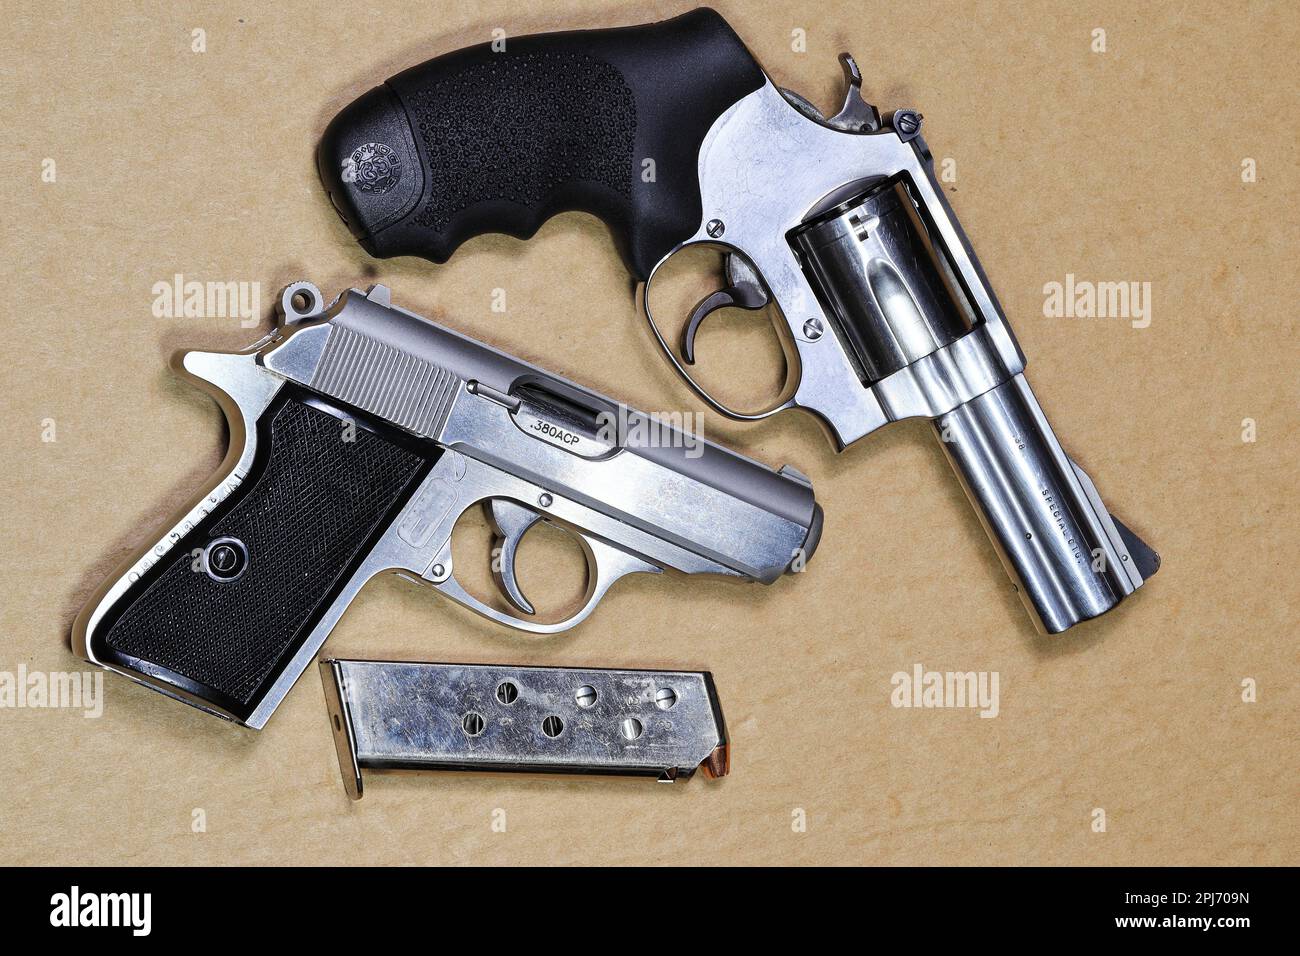 380 mm hand gun stock photo. Image of agency, classic - 51394710